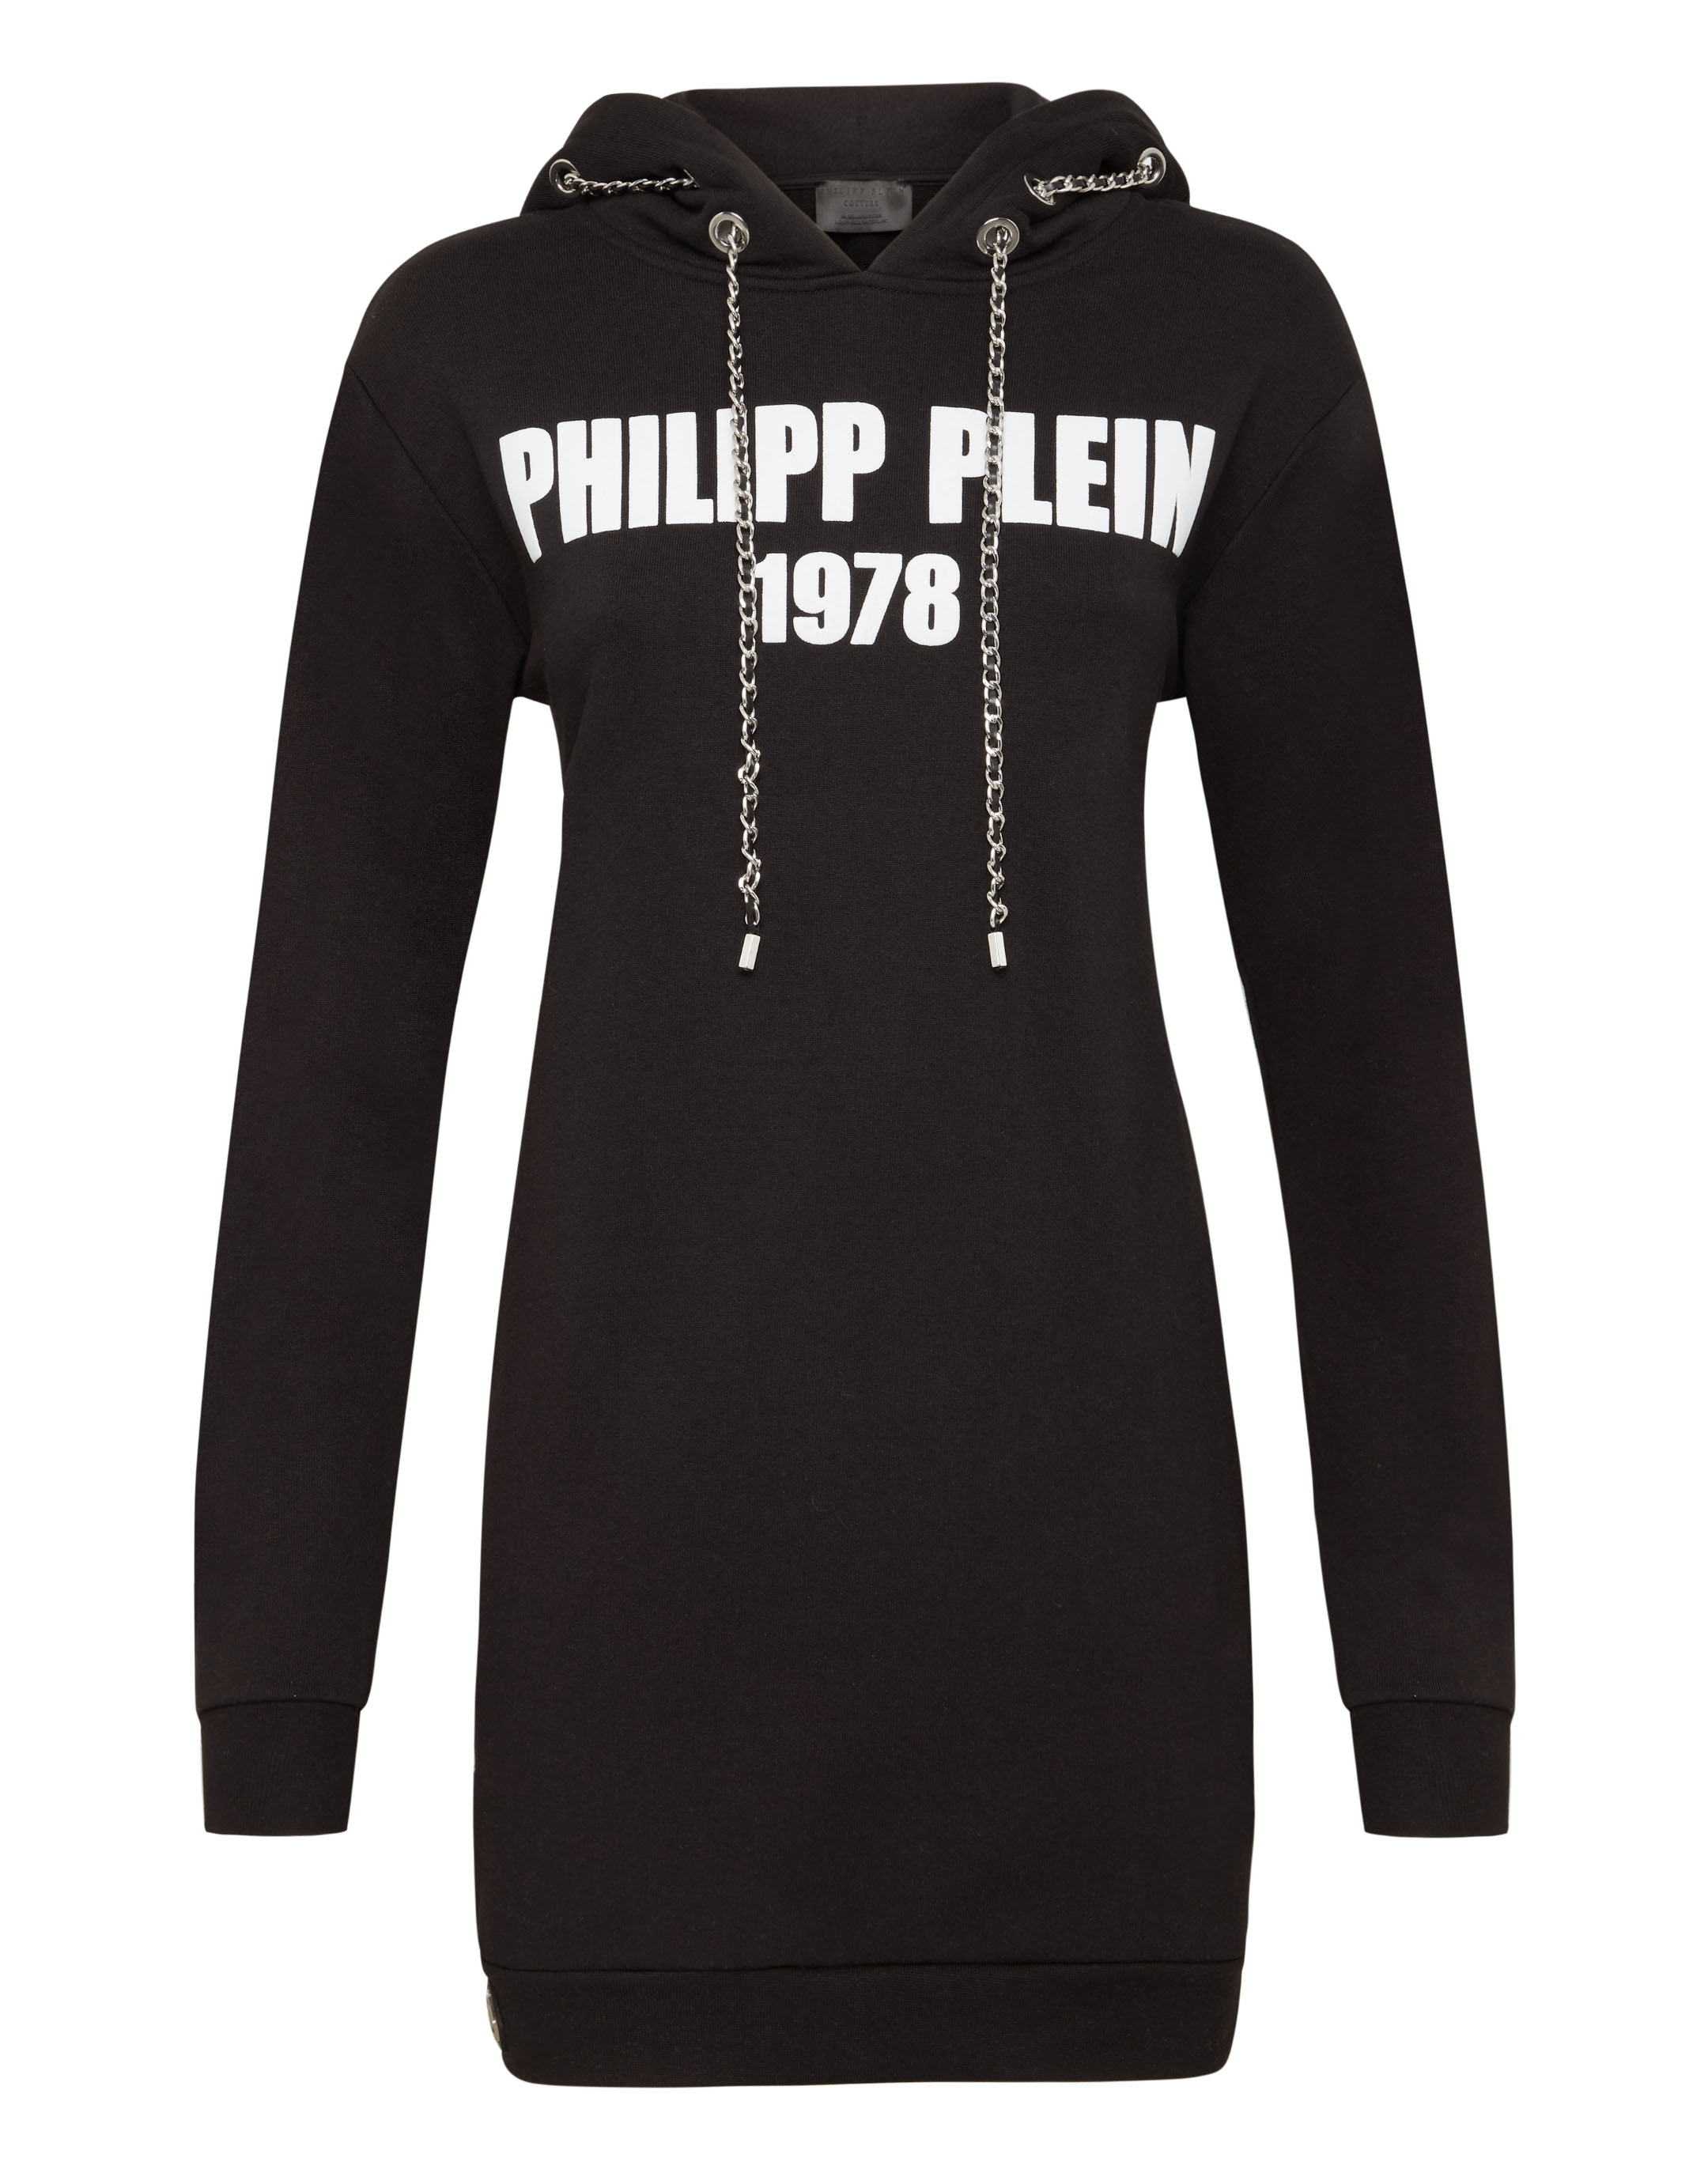 philipp plein 1978 hoodie